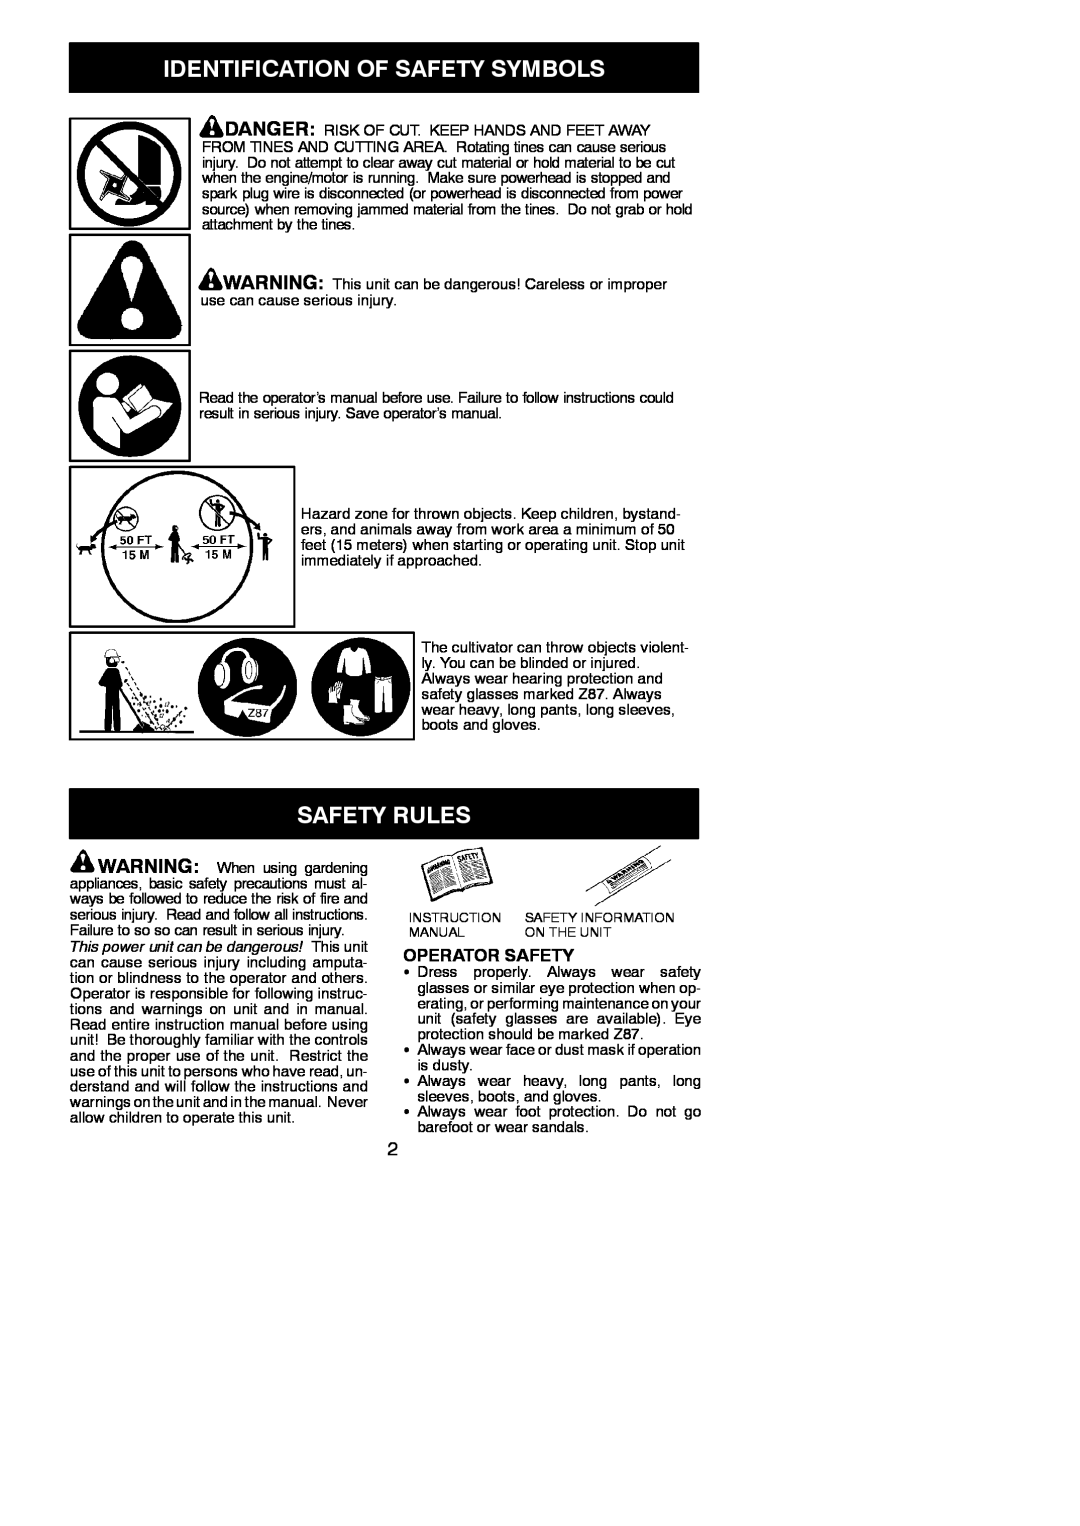 Poulan 952711826, 545212826 instruction manual Identification Of Safety Symbols, Safety Rules, Operator Safety 